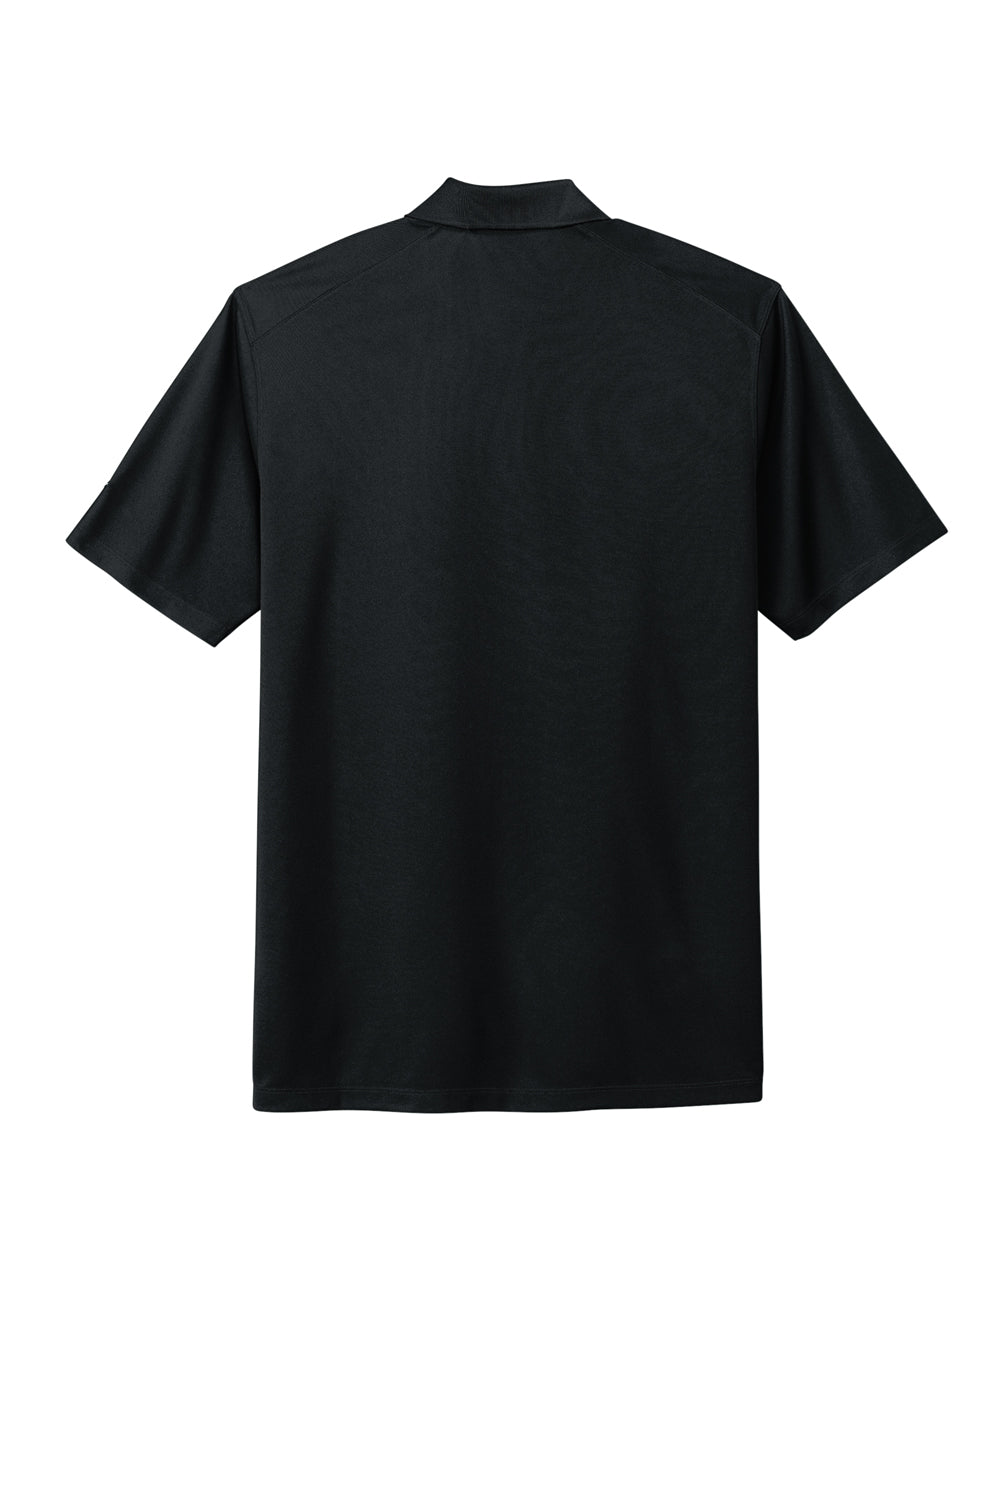 Nike NKDC1963 Mens Dri-Fit Moisture Wicking Micro Pique 2.0 Short Sleeve Polo Shirt Black Flat Back